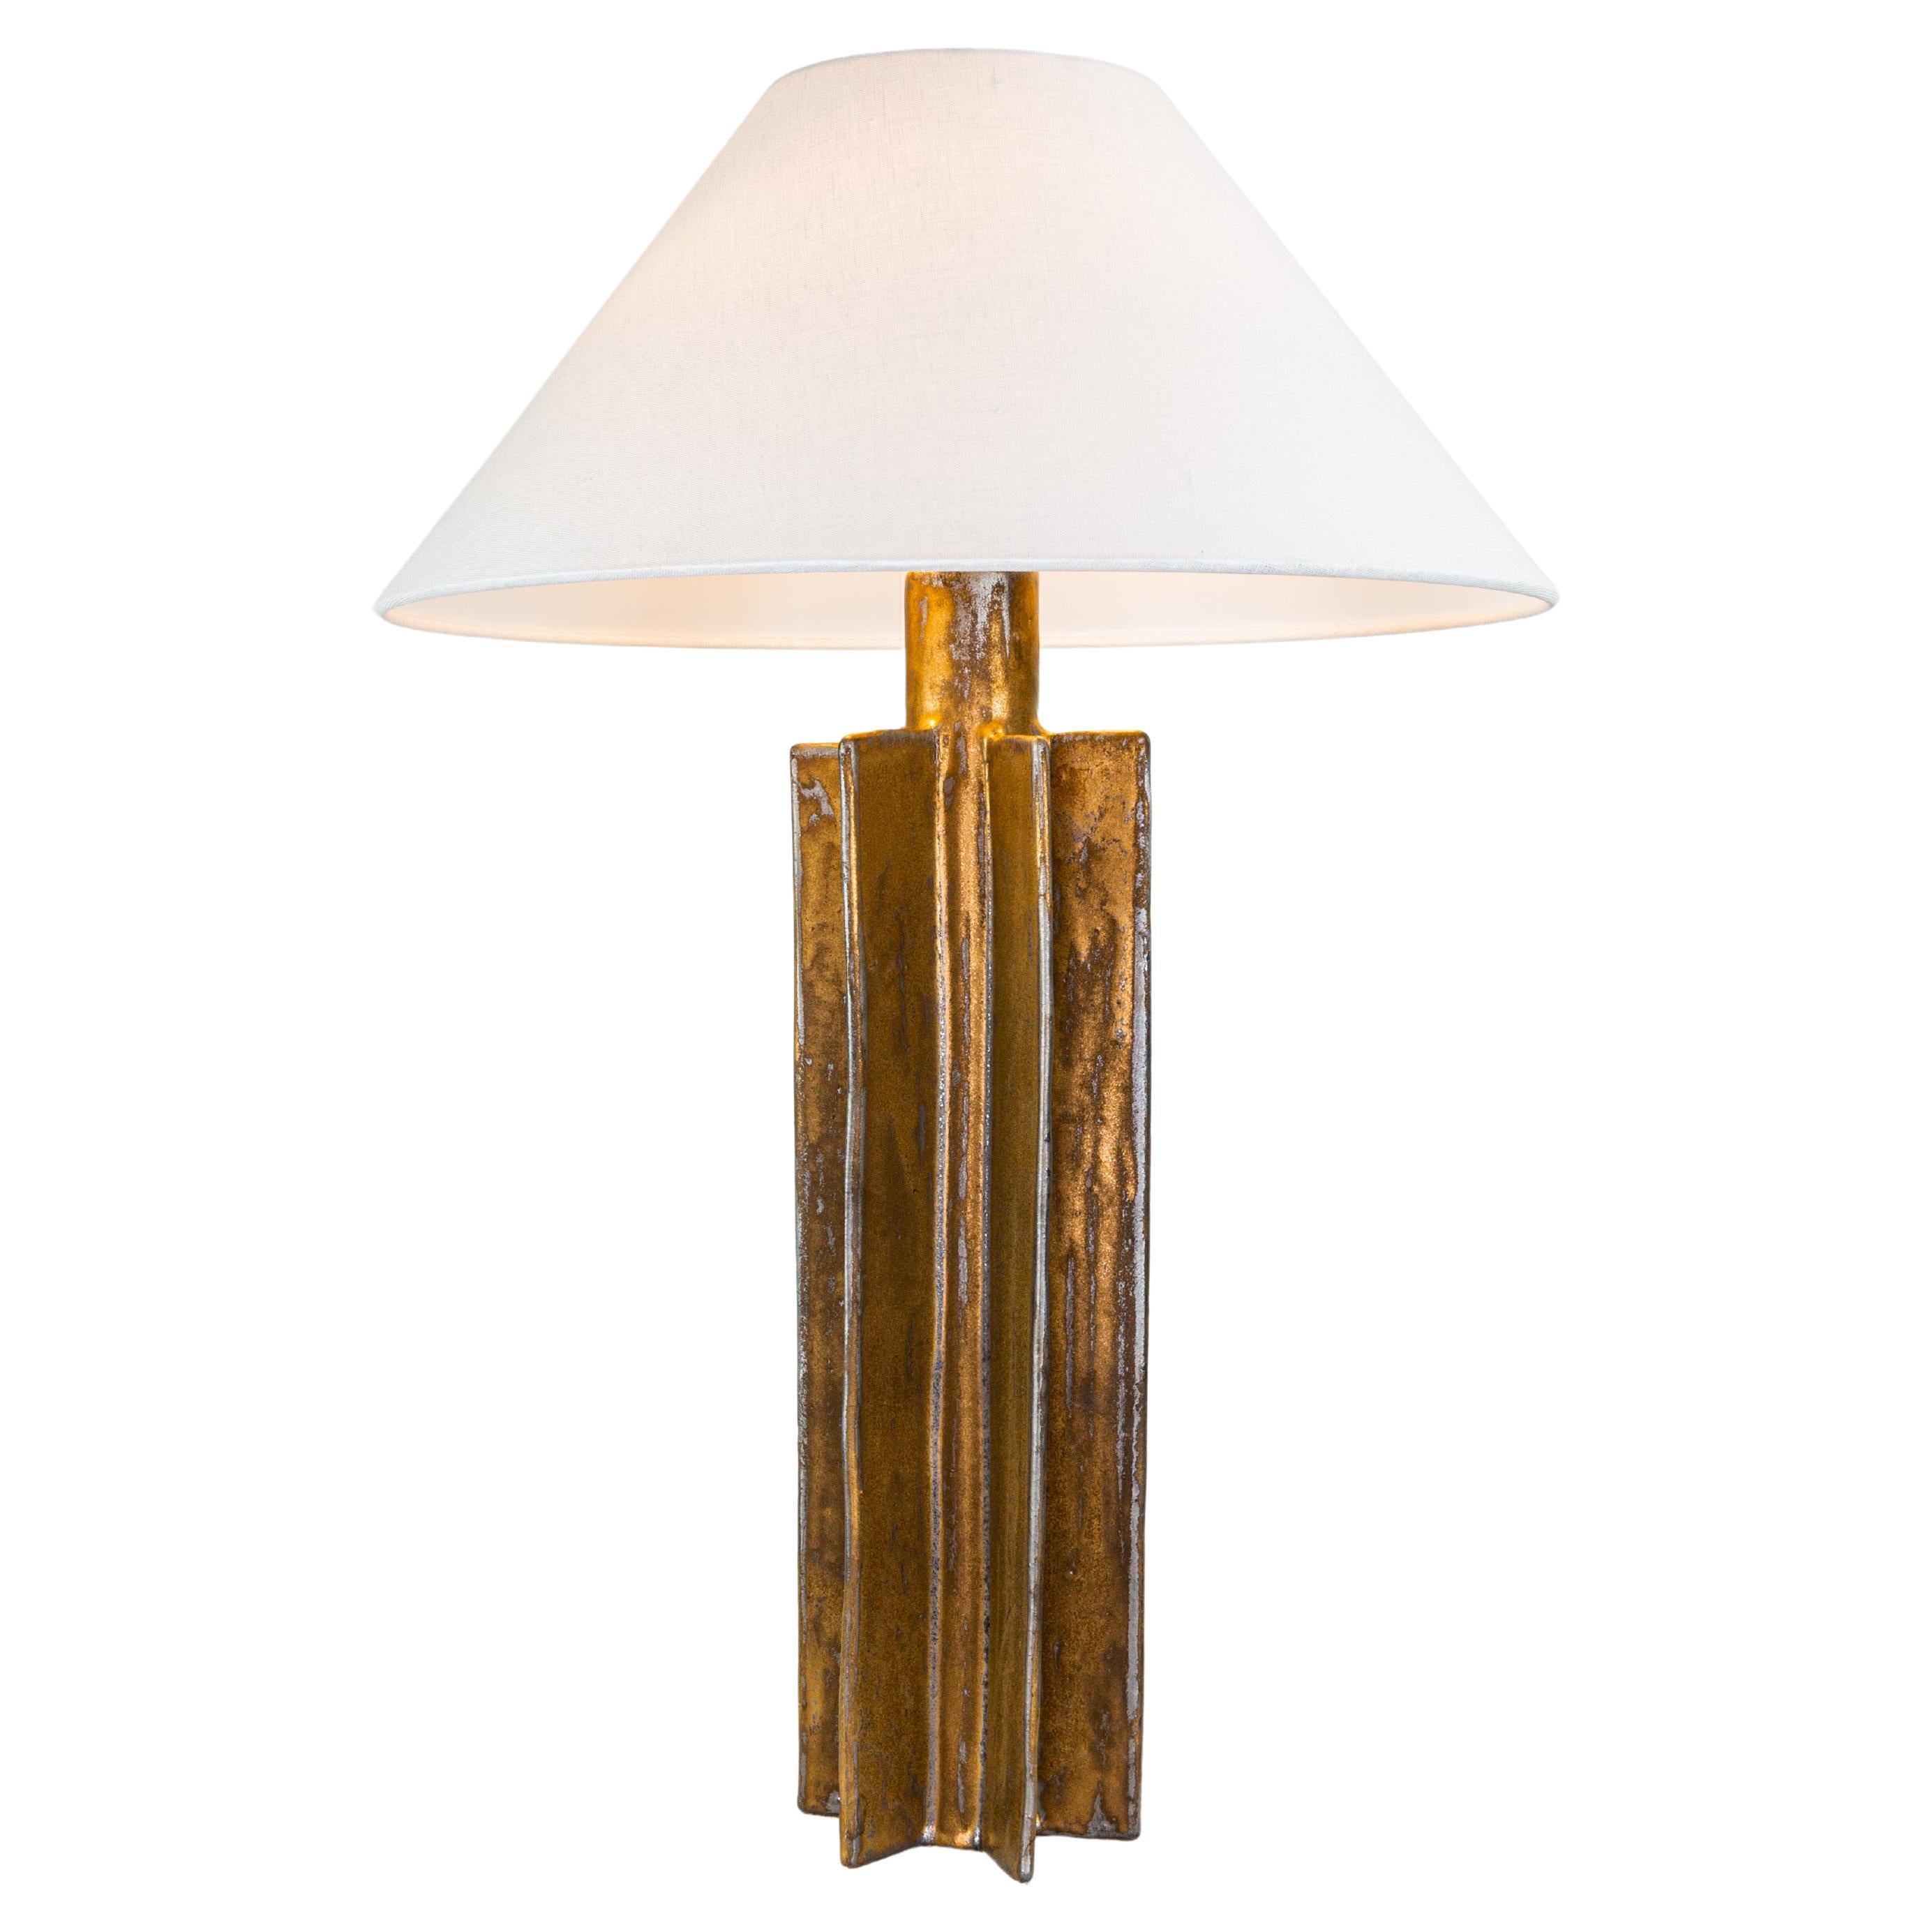 FIN Shade Table Lamp, Gold Glaze Finish, hanbuilt ceramic lamp by Kalin Asenov For Sale